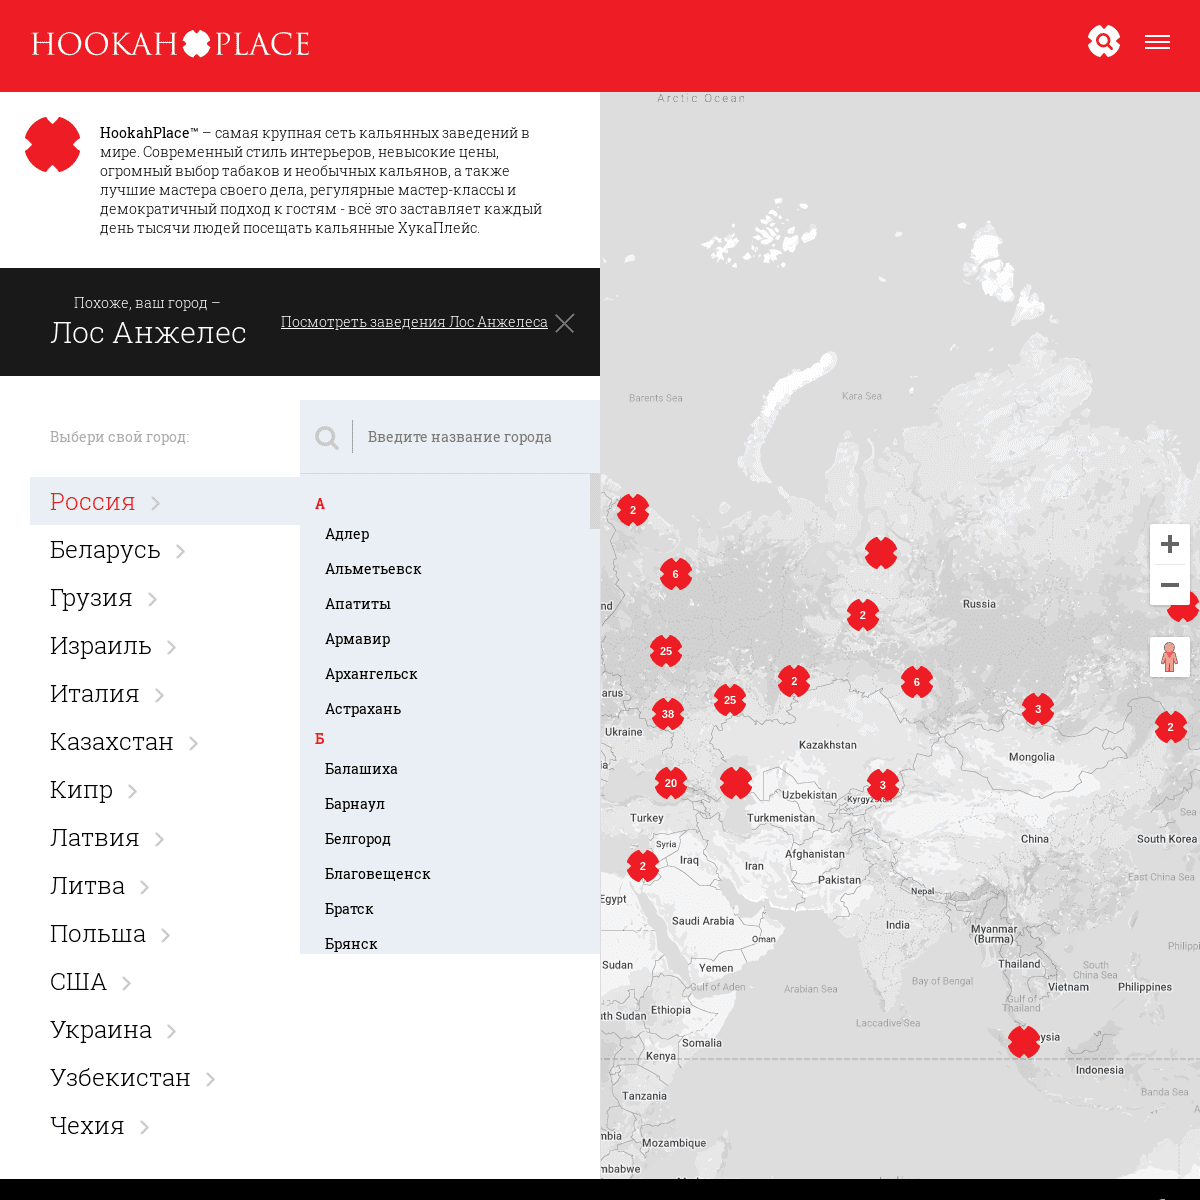 A complete backup of hookahplace.ru